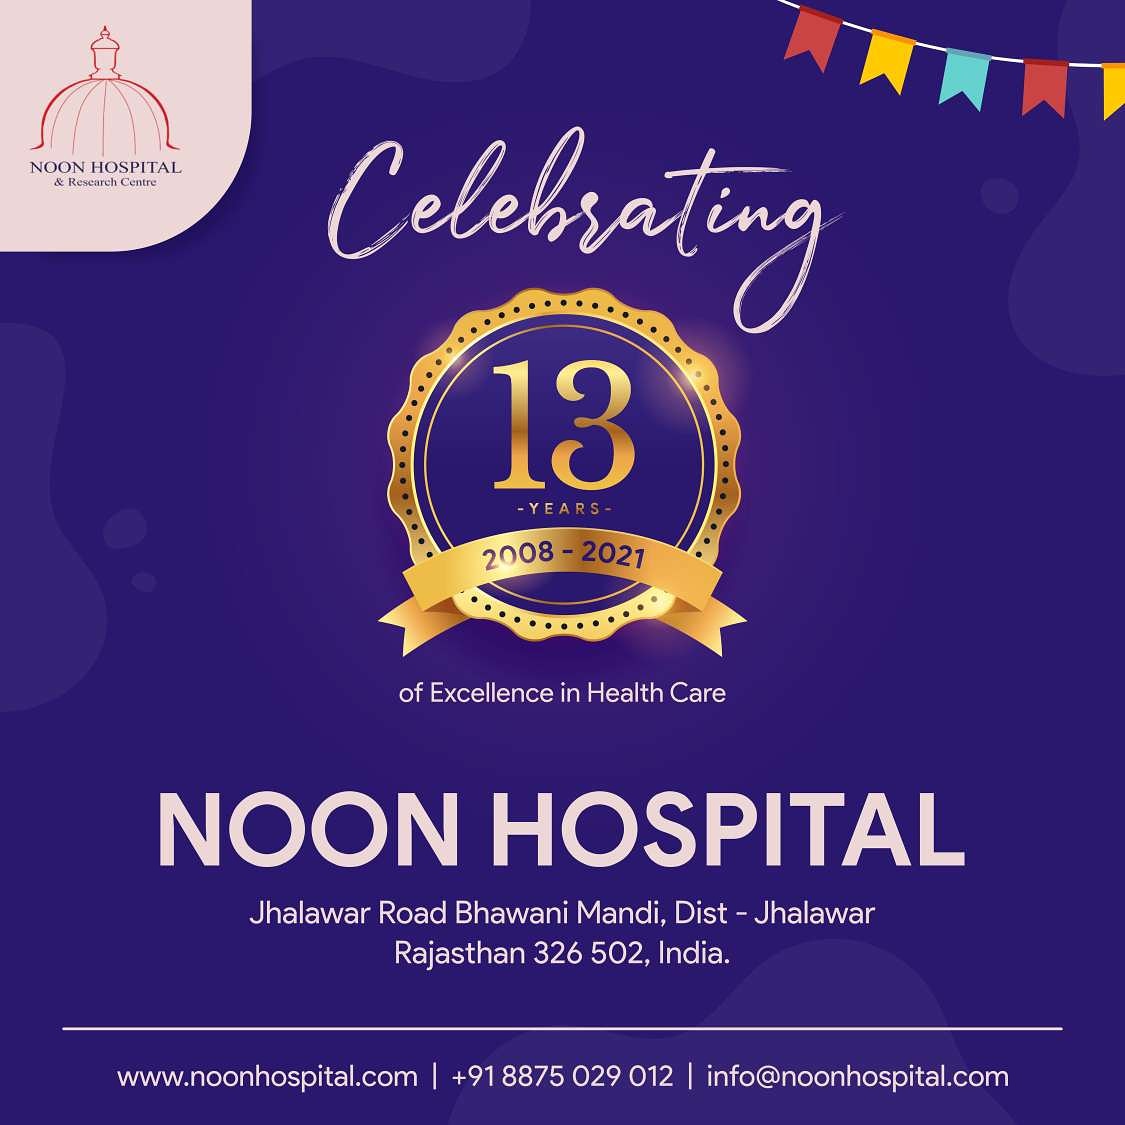 Noon Hospital Celebrating 13th Anniversary